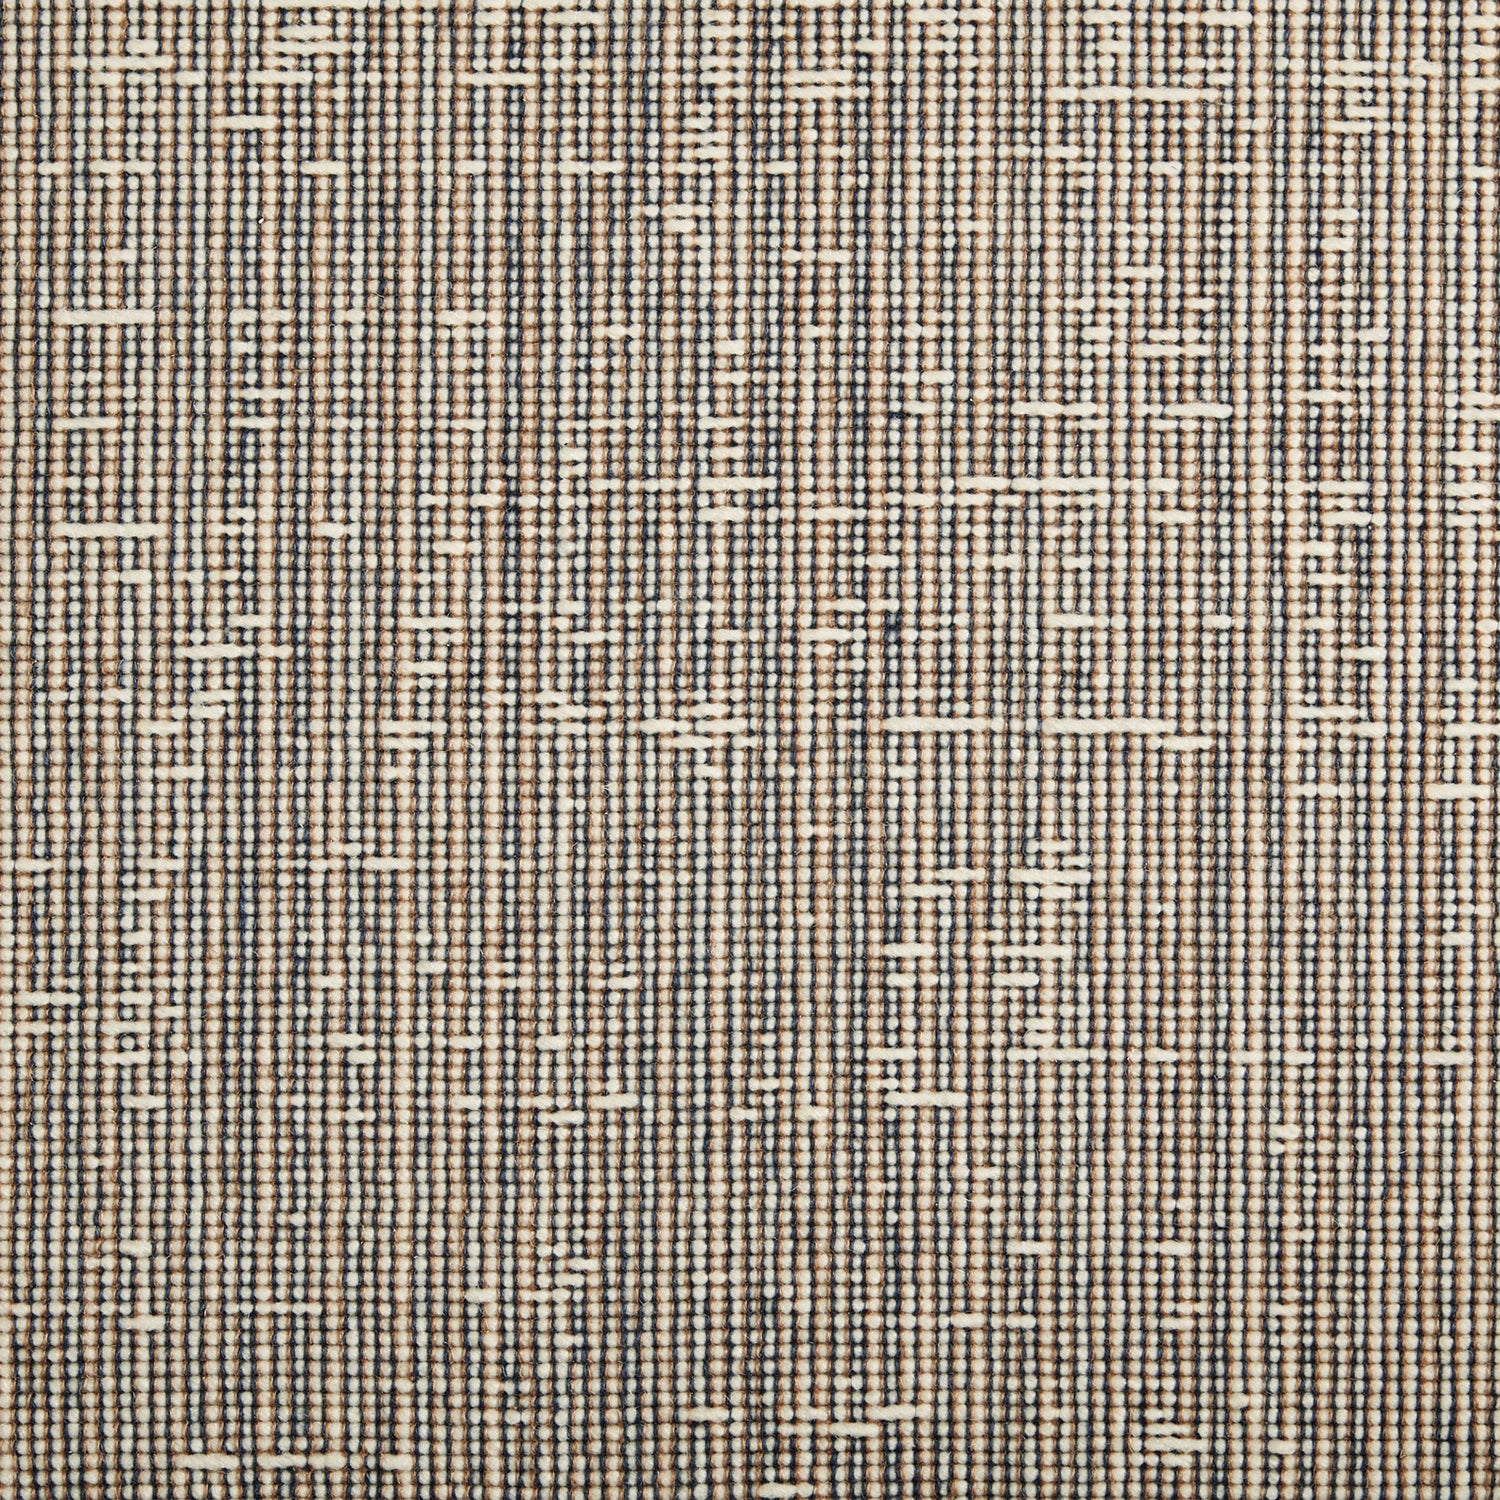 Wool broadloom carpet swatch in a chunky weave in mottled cream, tan and black.